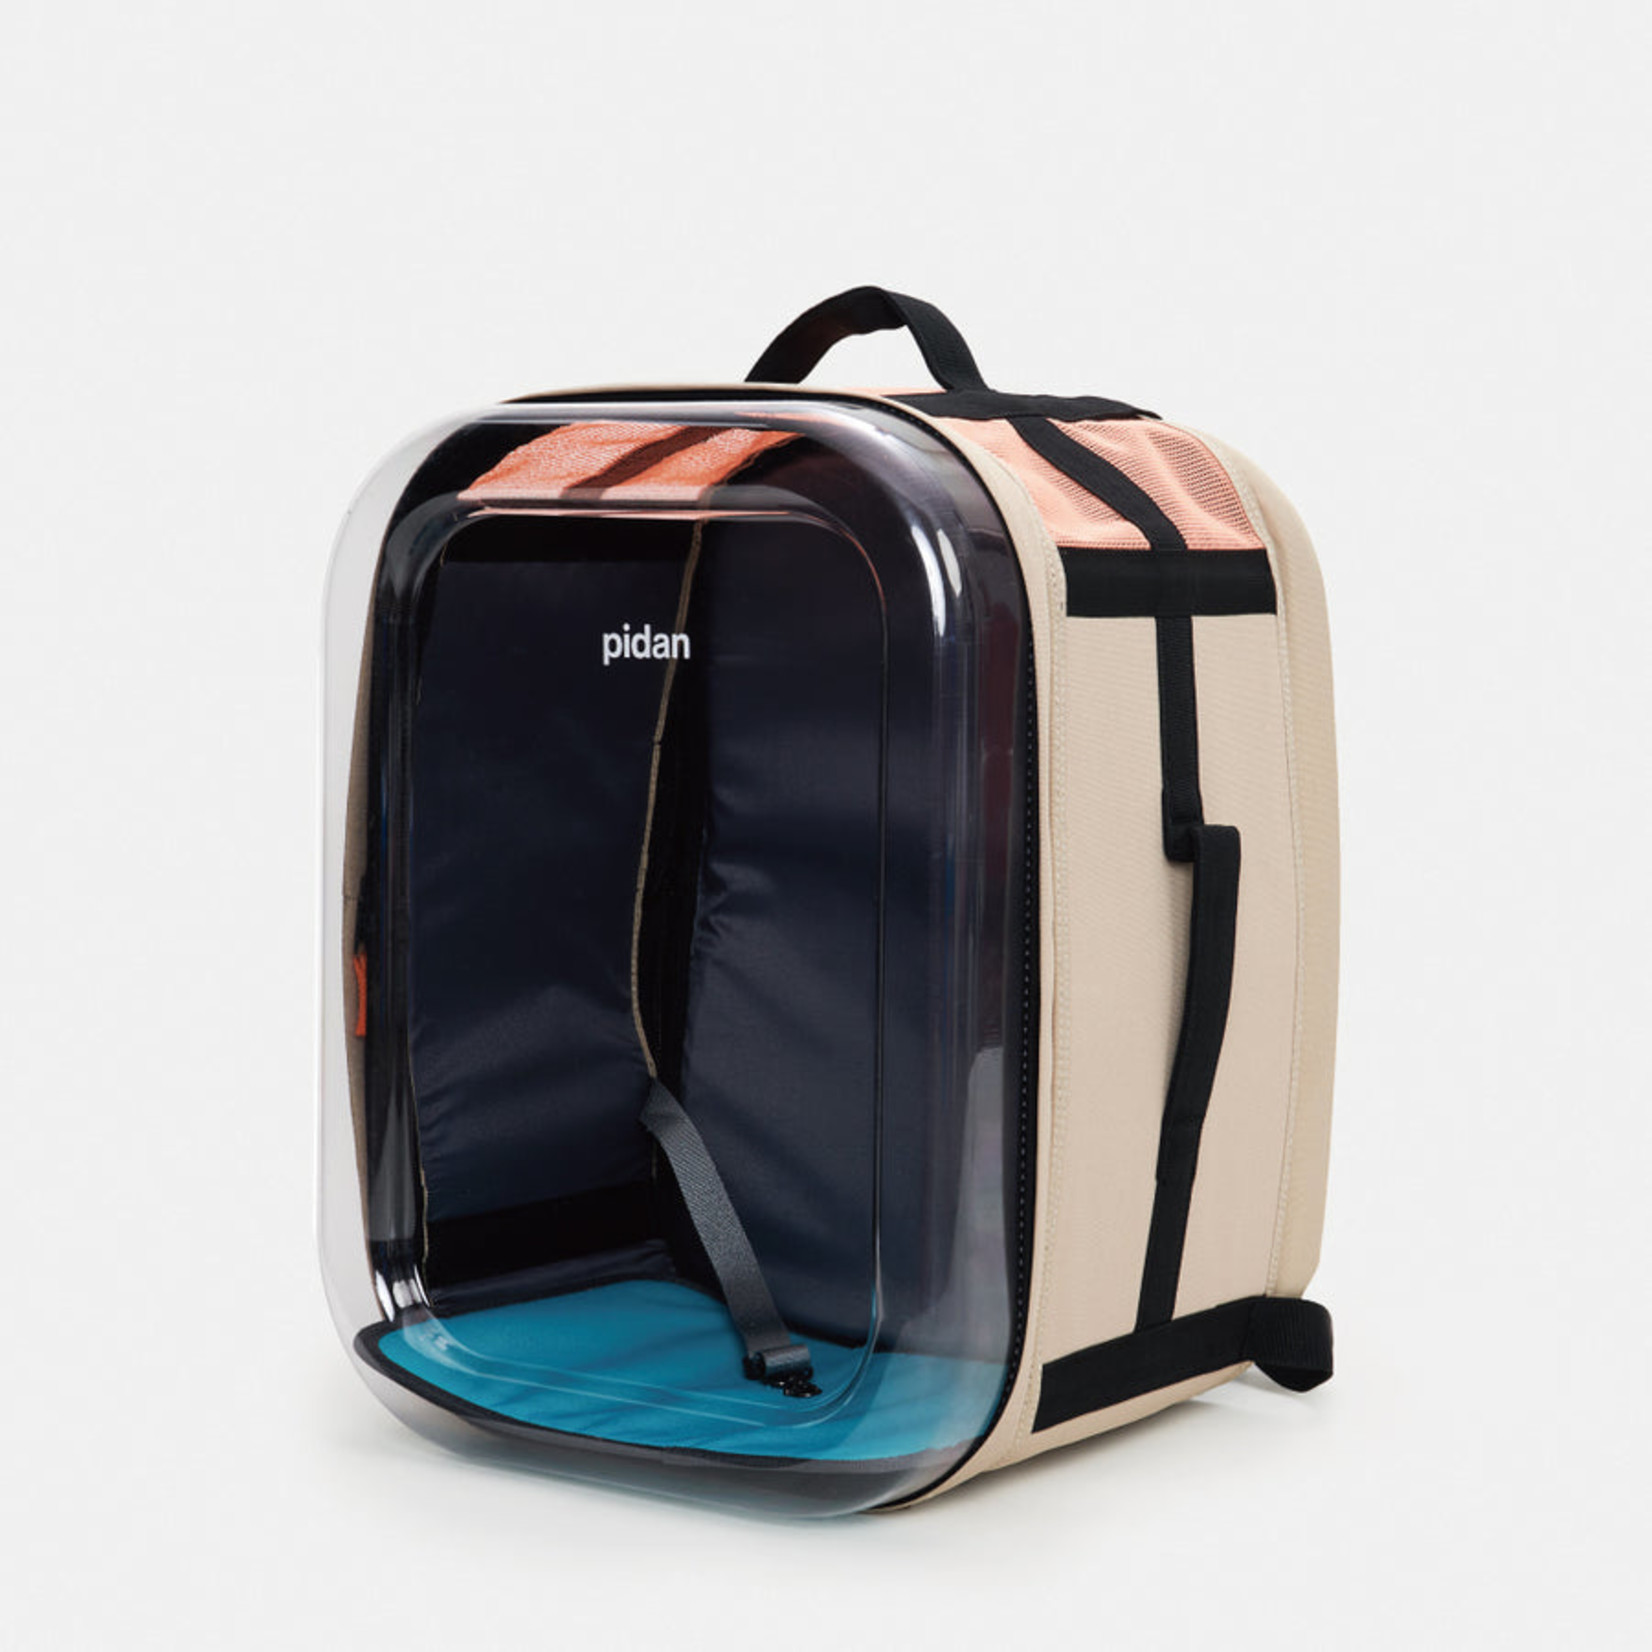 Teddybob / Pidan PIDAN Pet Carry Bag For Cats Backpack Type